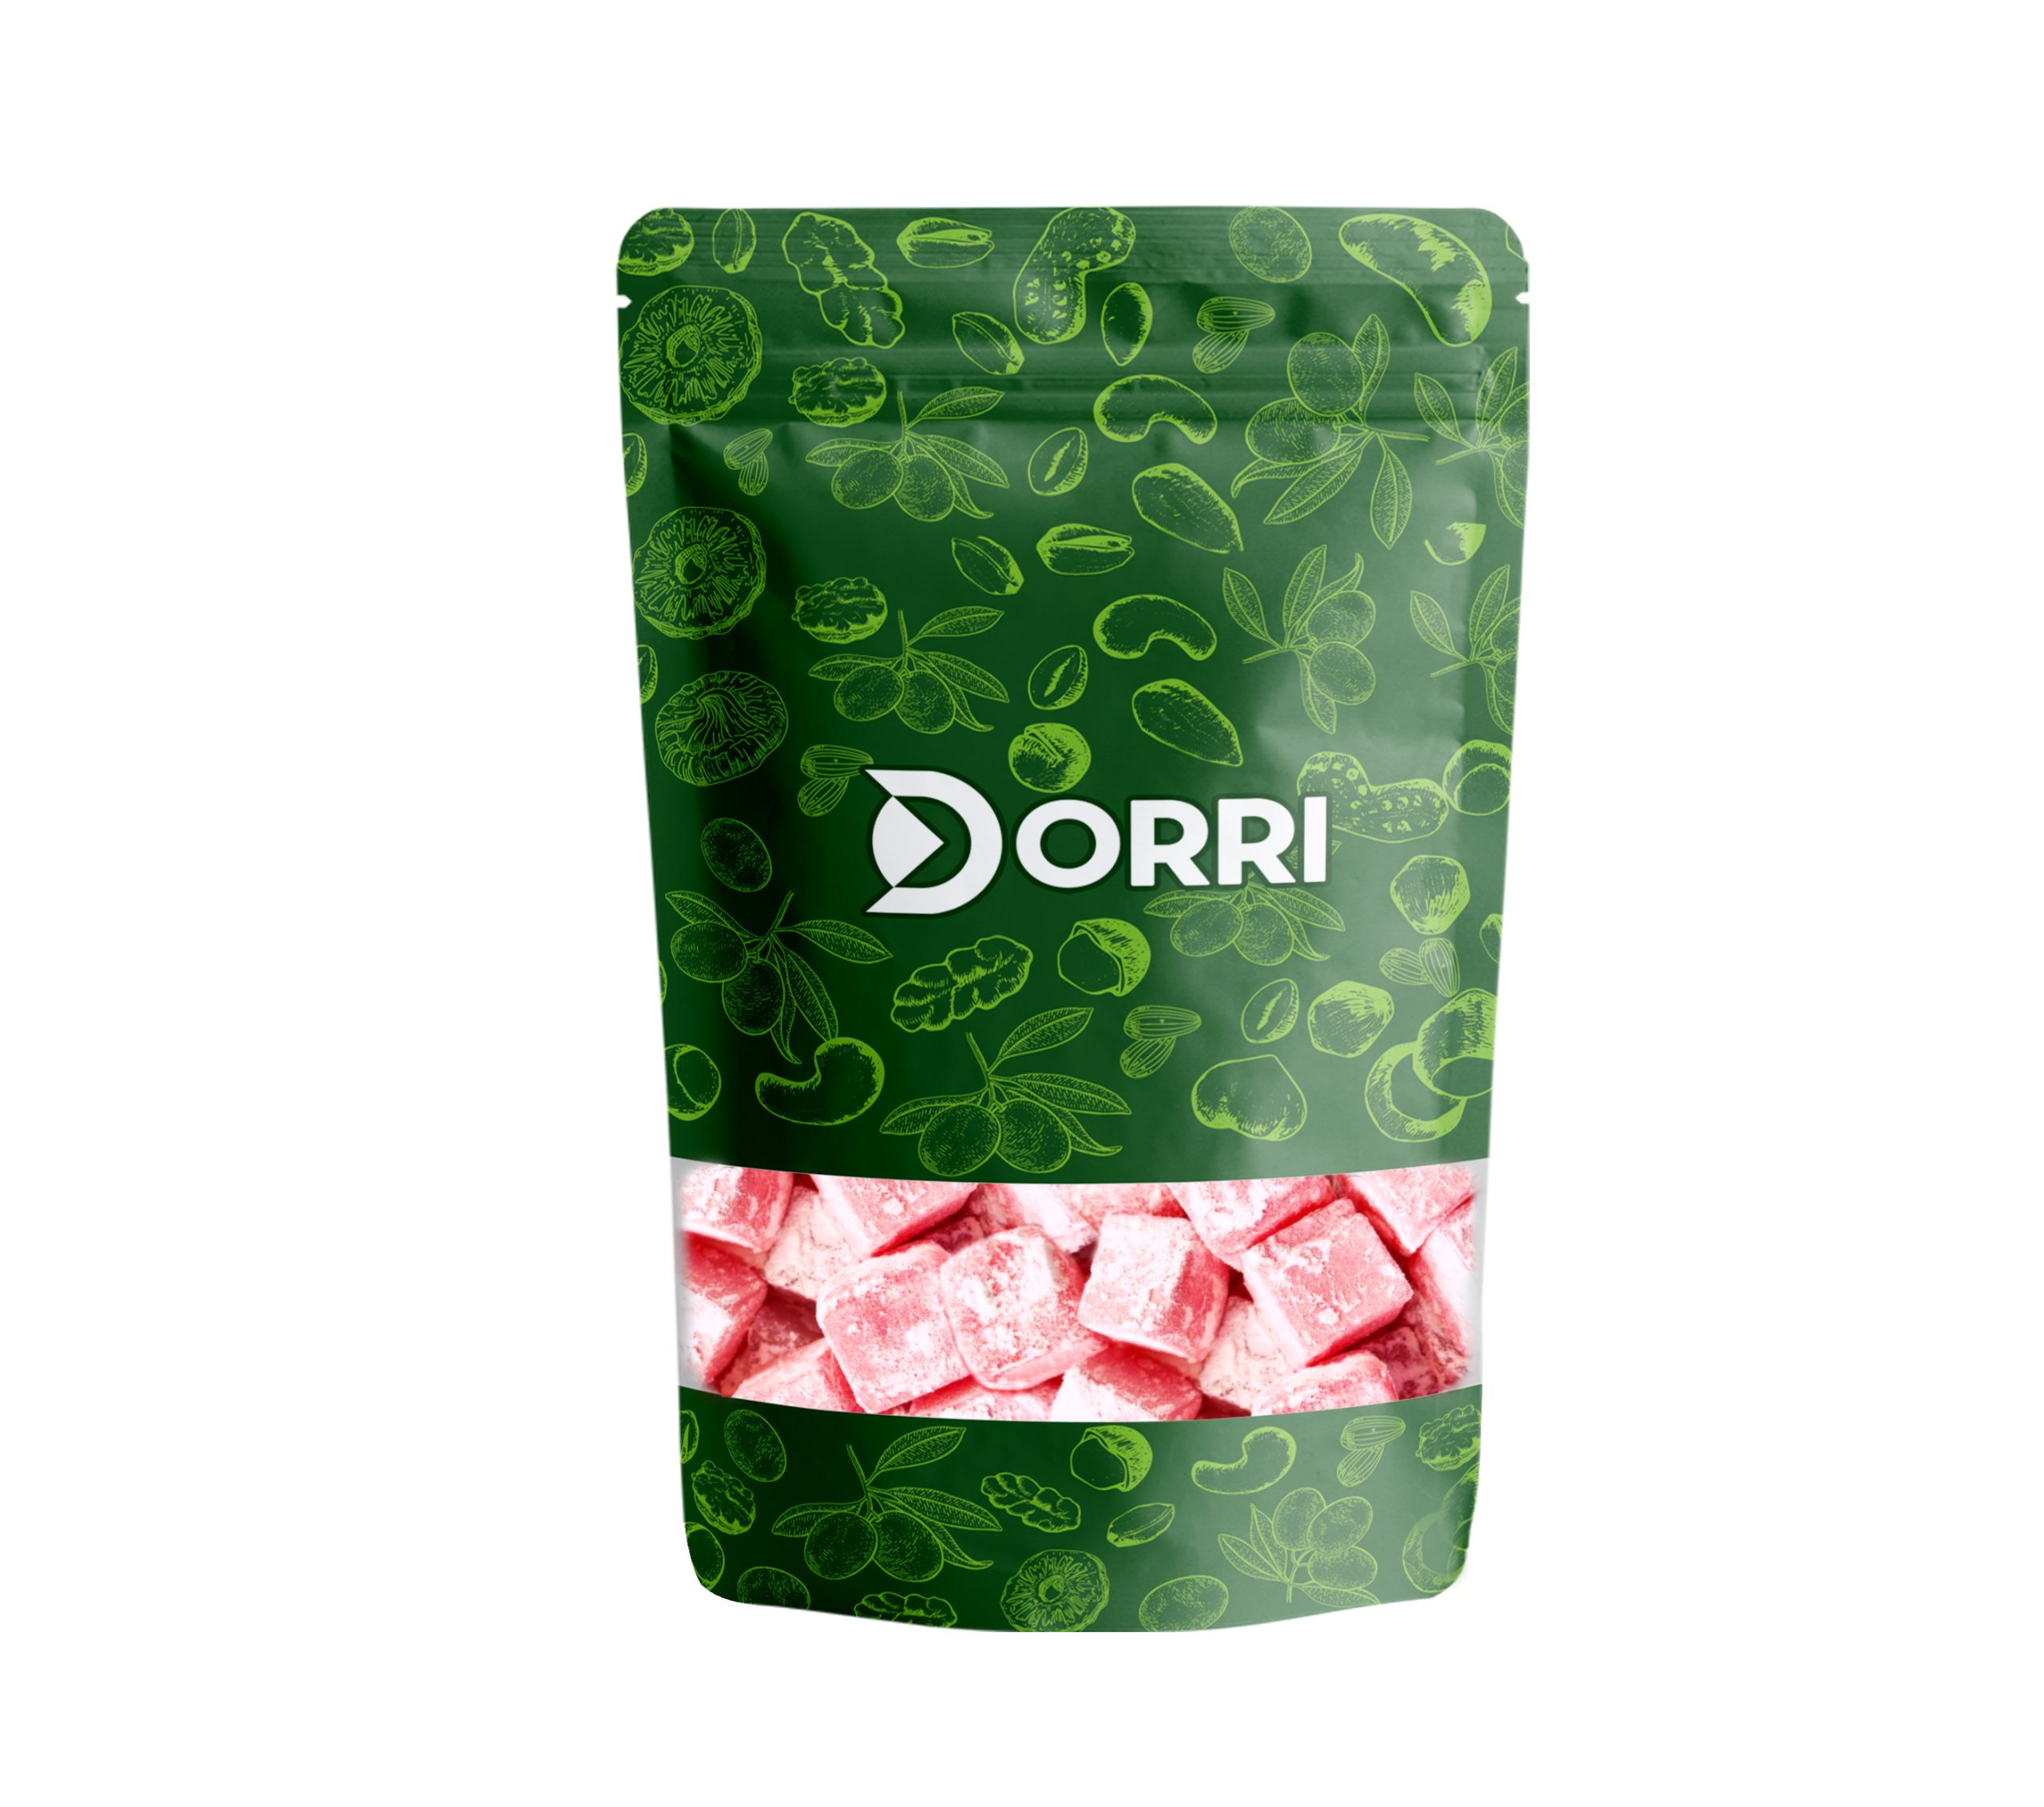 Dorri - Turkish Delight Strawberry